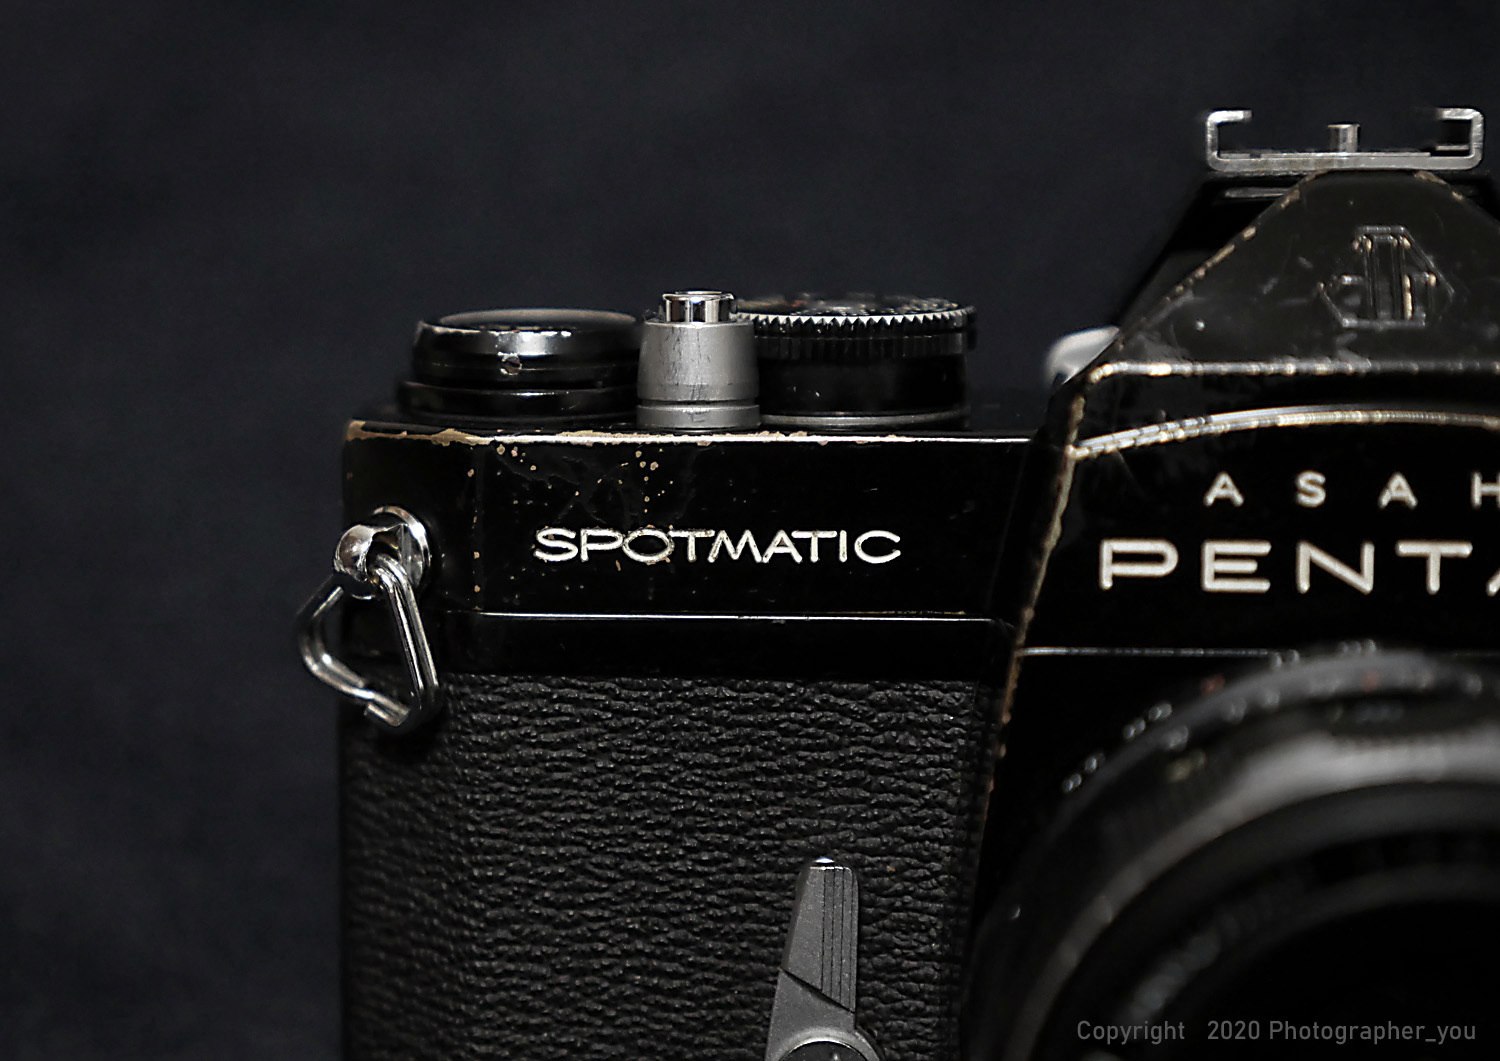 Pentax SP黒 + 中望遠レンズ  美品